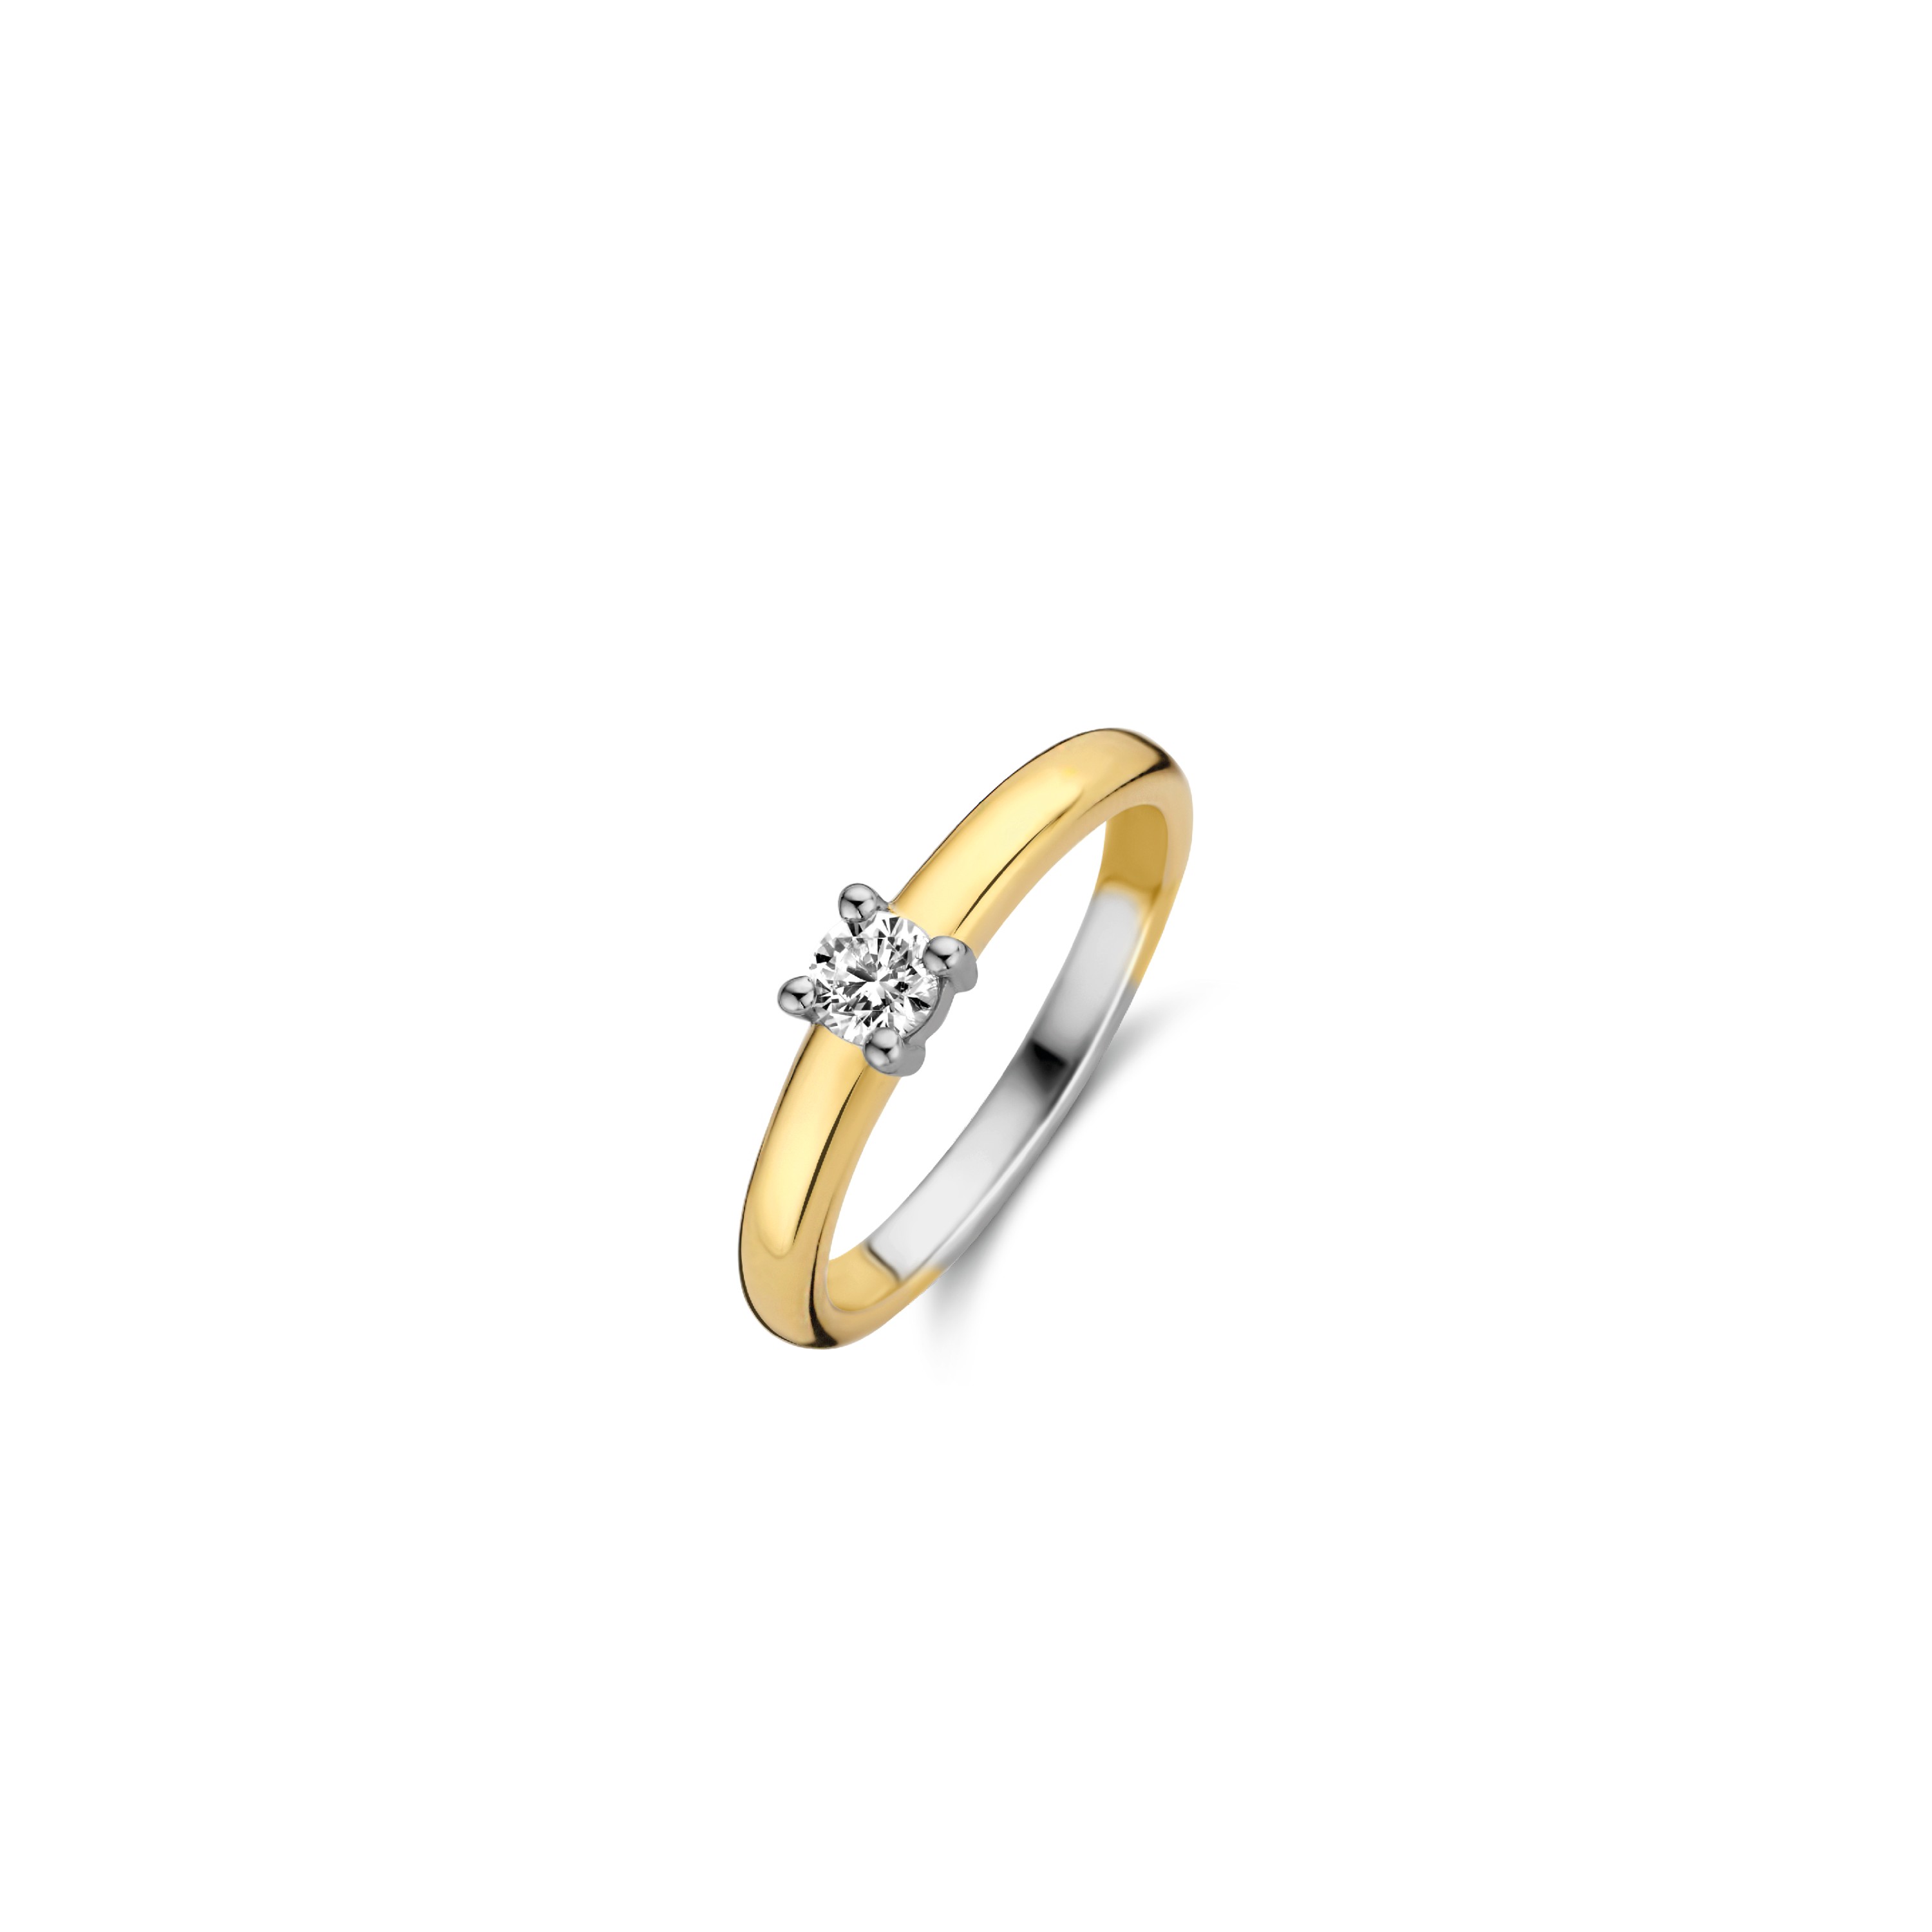 TI SENTO - Milano Ring 12212ZY Gala Jewelers Inc. White Oak, PA